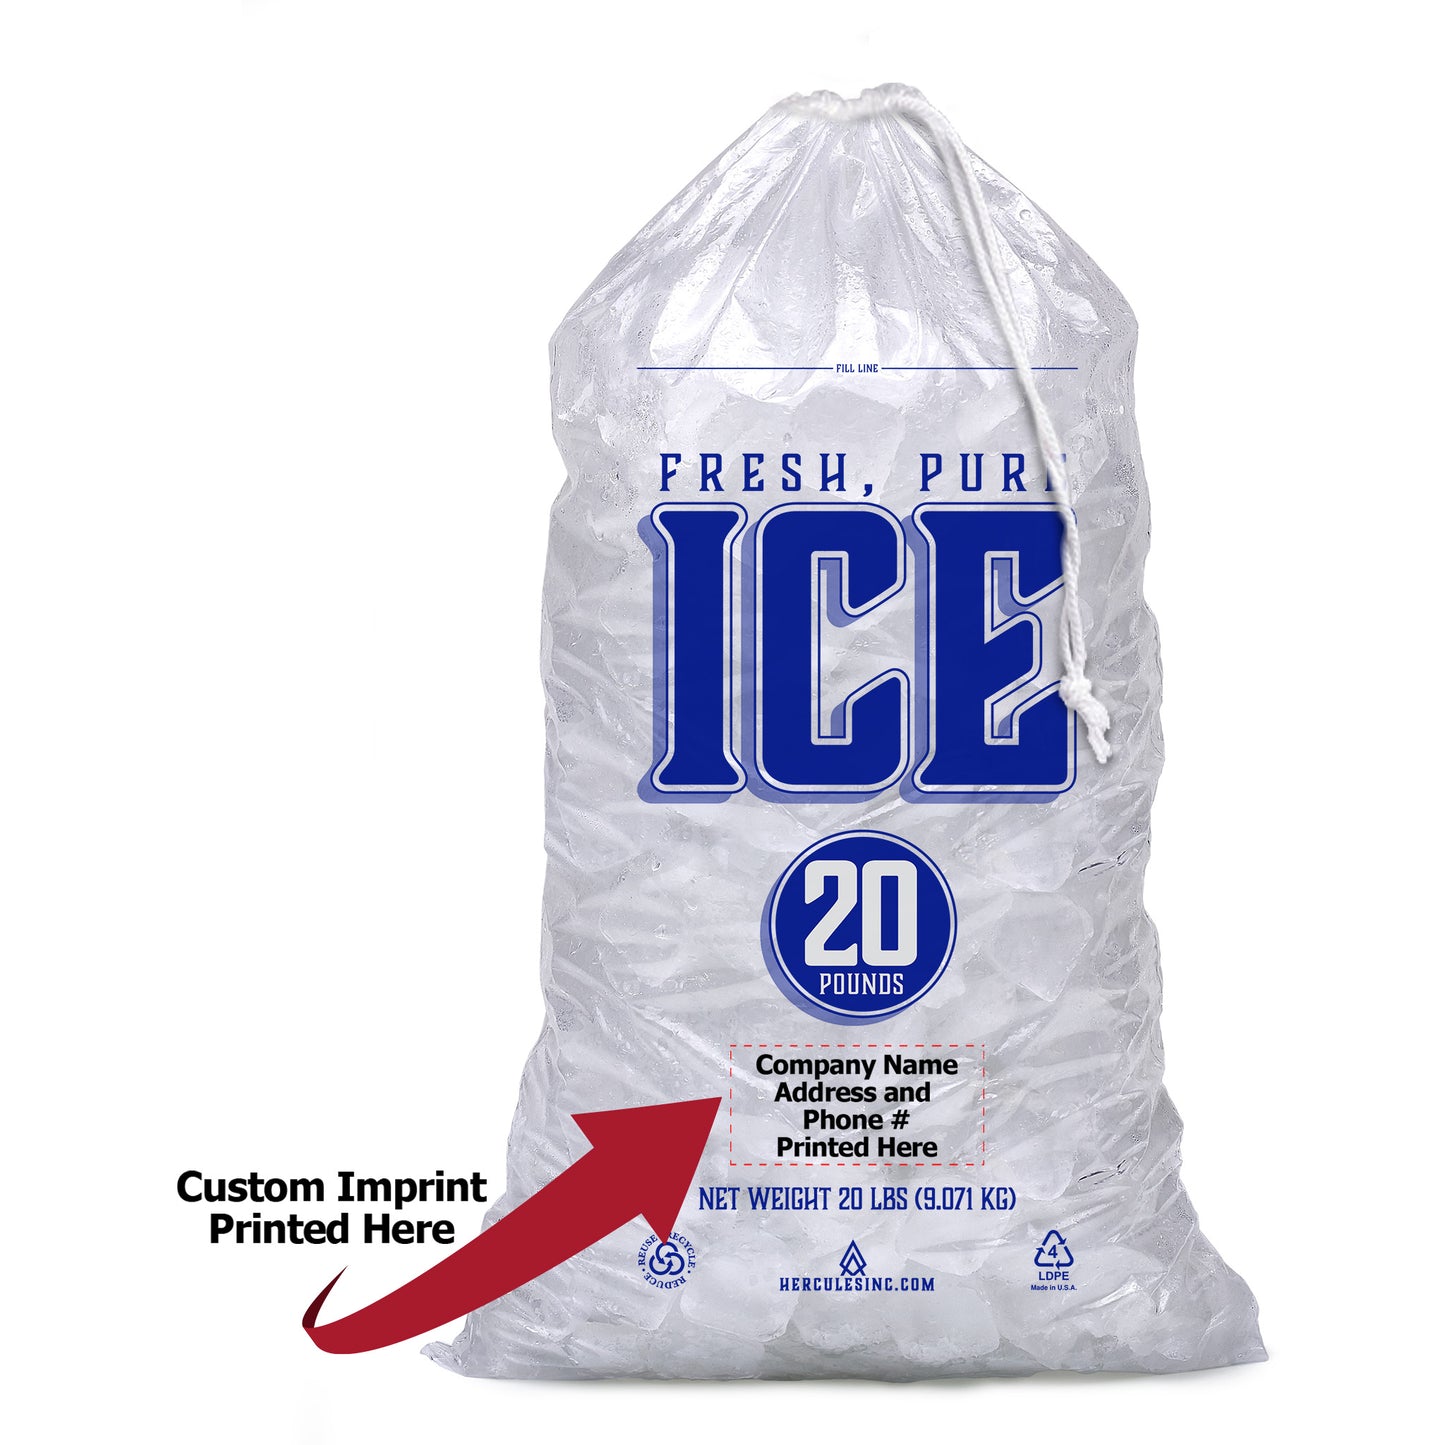 Custom Imprint 20# Ice Bags - Fresh, Pure, Ice - 5,000 Bags